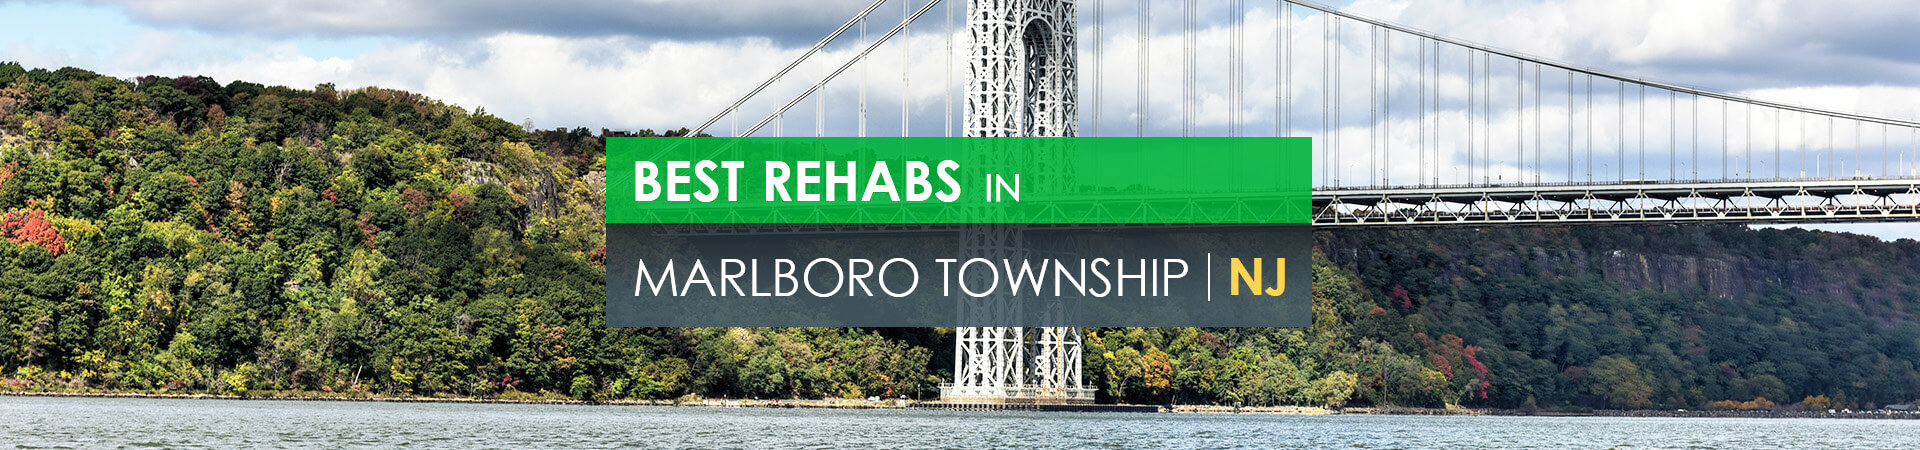 Best rehabs in Marlboro Township, NJ